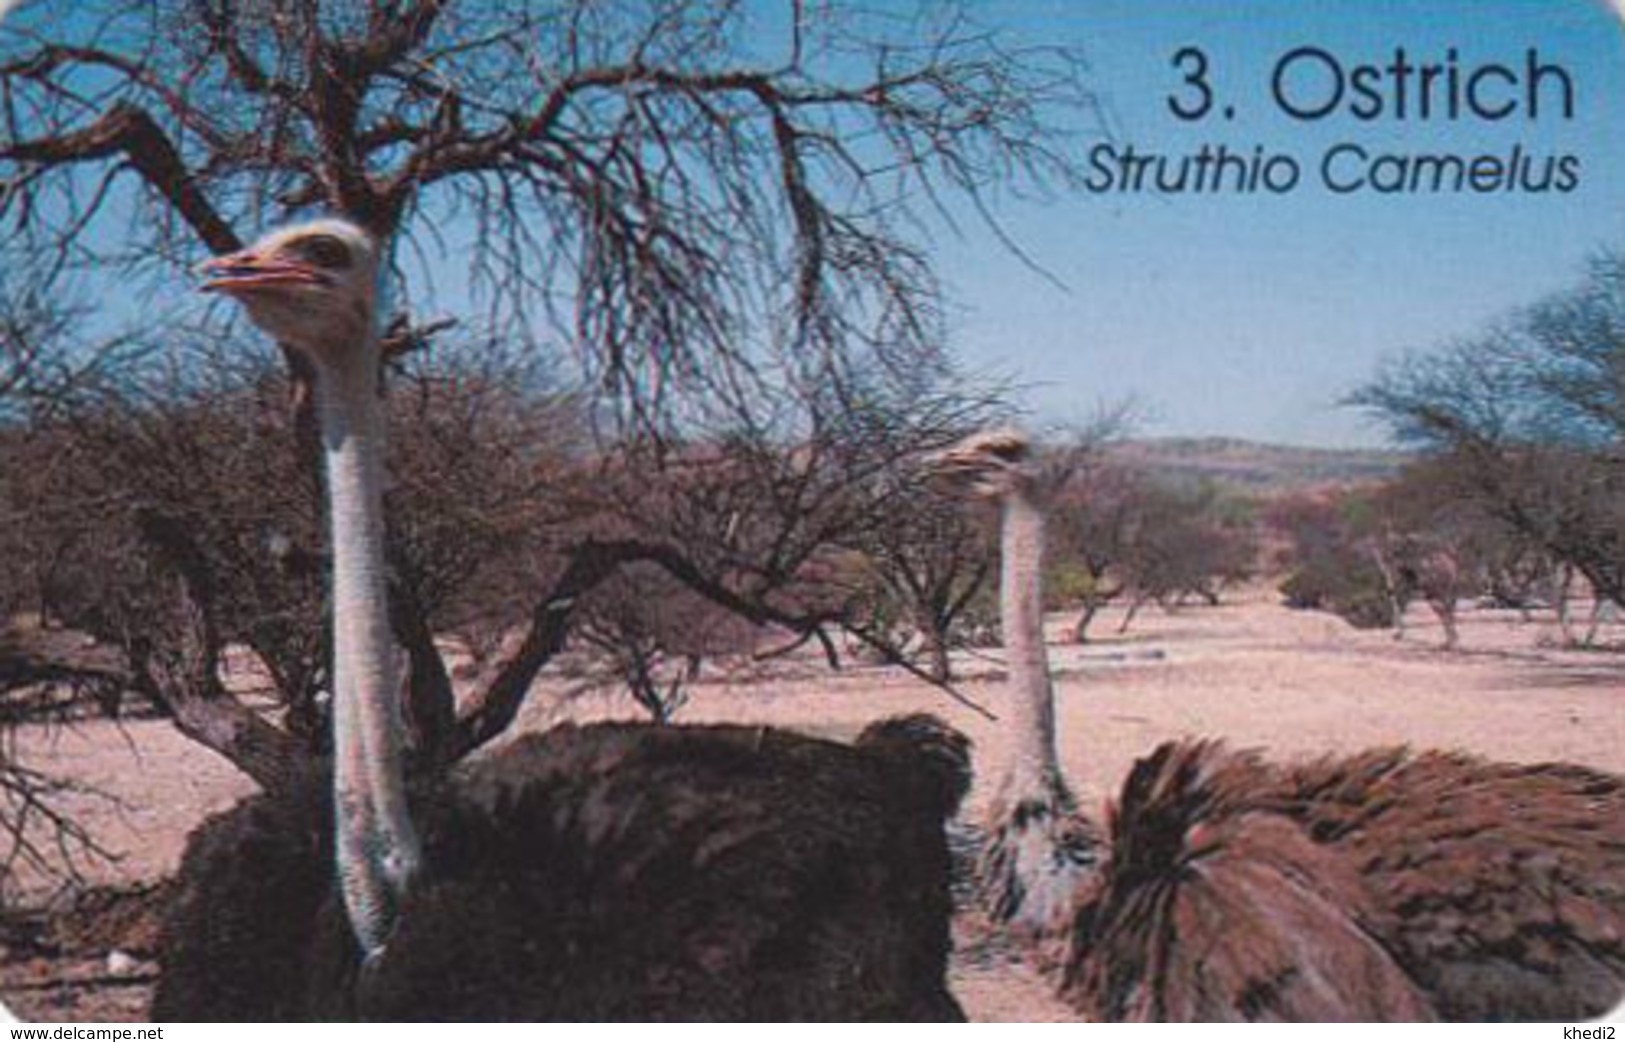 Télécarte à Puce NAMIBIE - Animal - Oiseau - AUTRUCHE - OSTRICH Bird NAMIBIA Chip Phonecard - STRAUSS Vogel - 4511 - Namibia